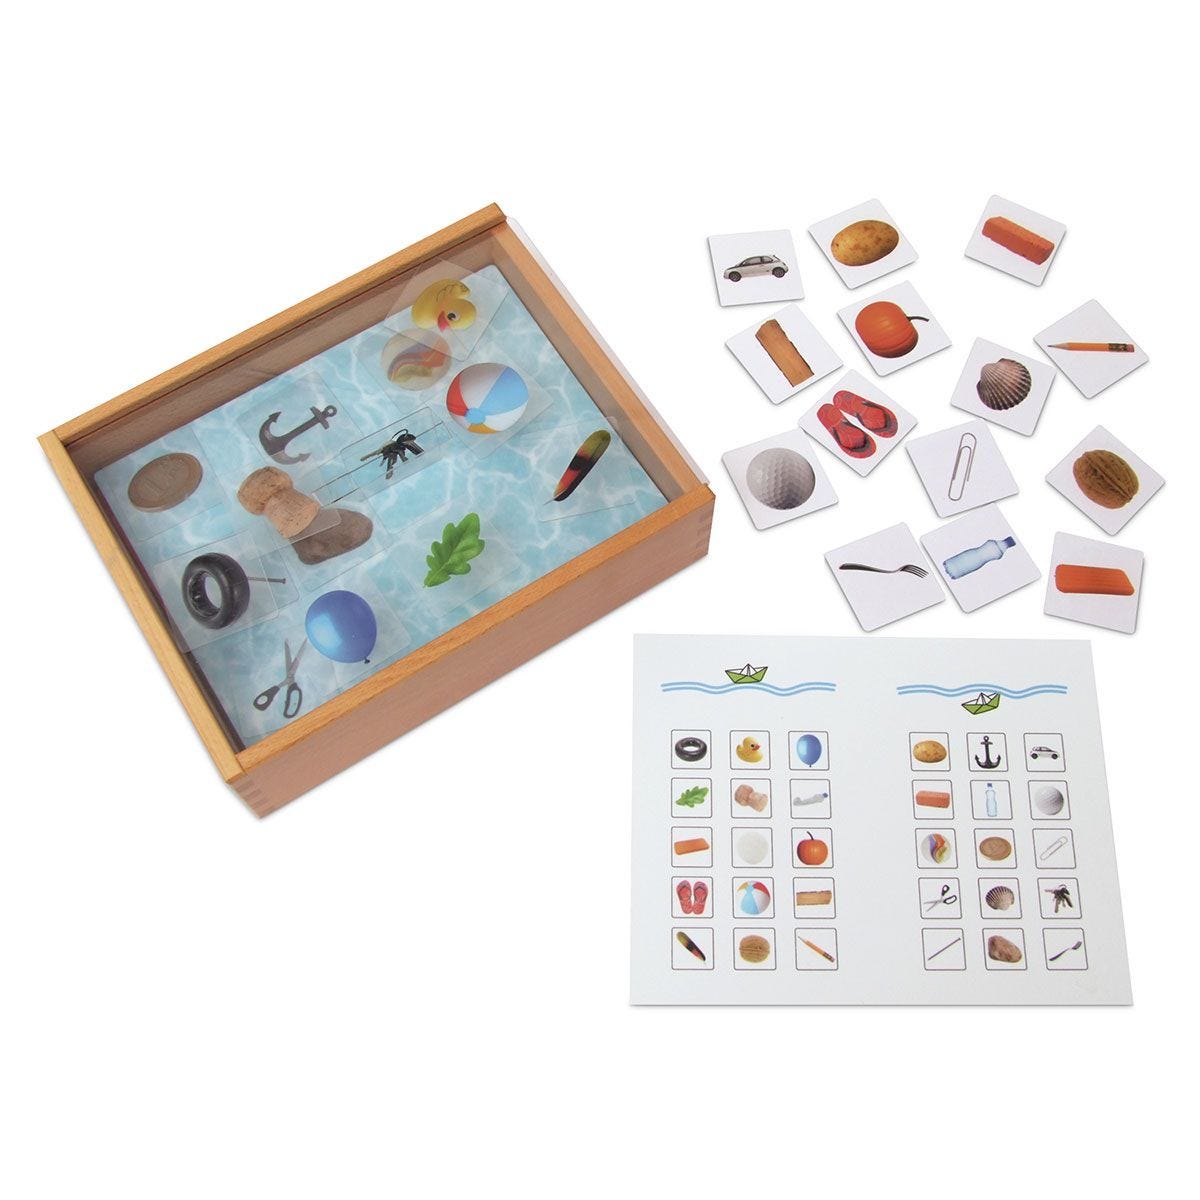 Montessori Materials: English / Metric Tape Measures, Set of 10